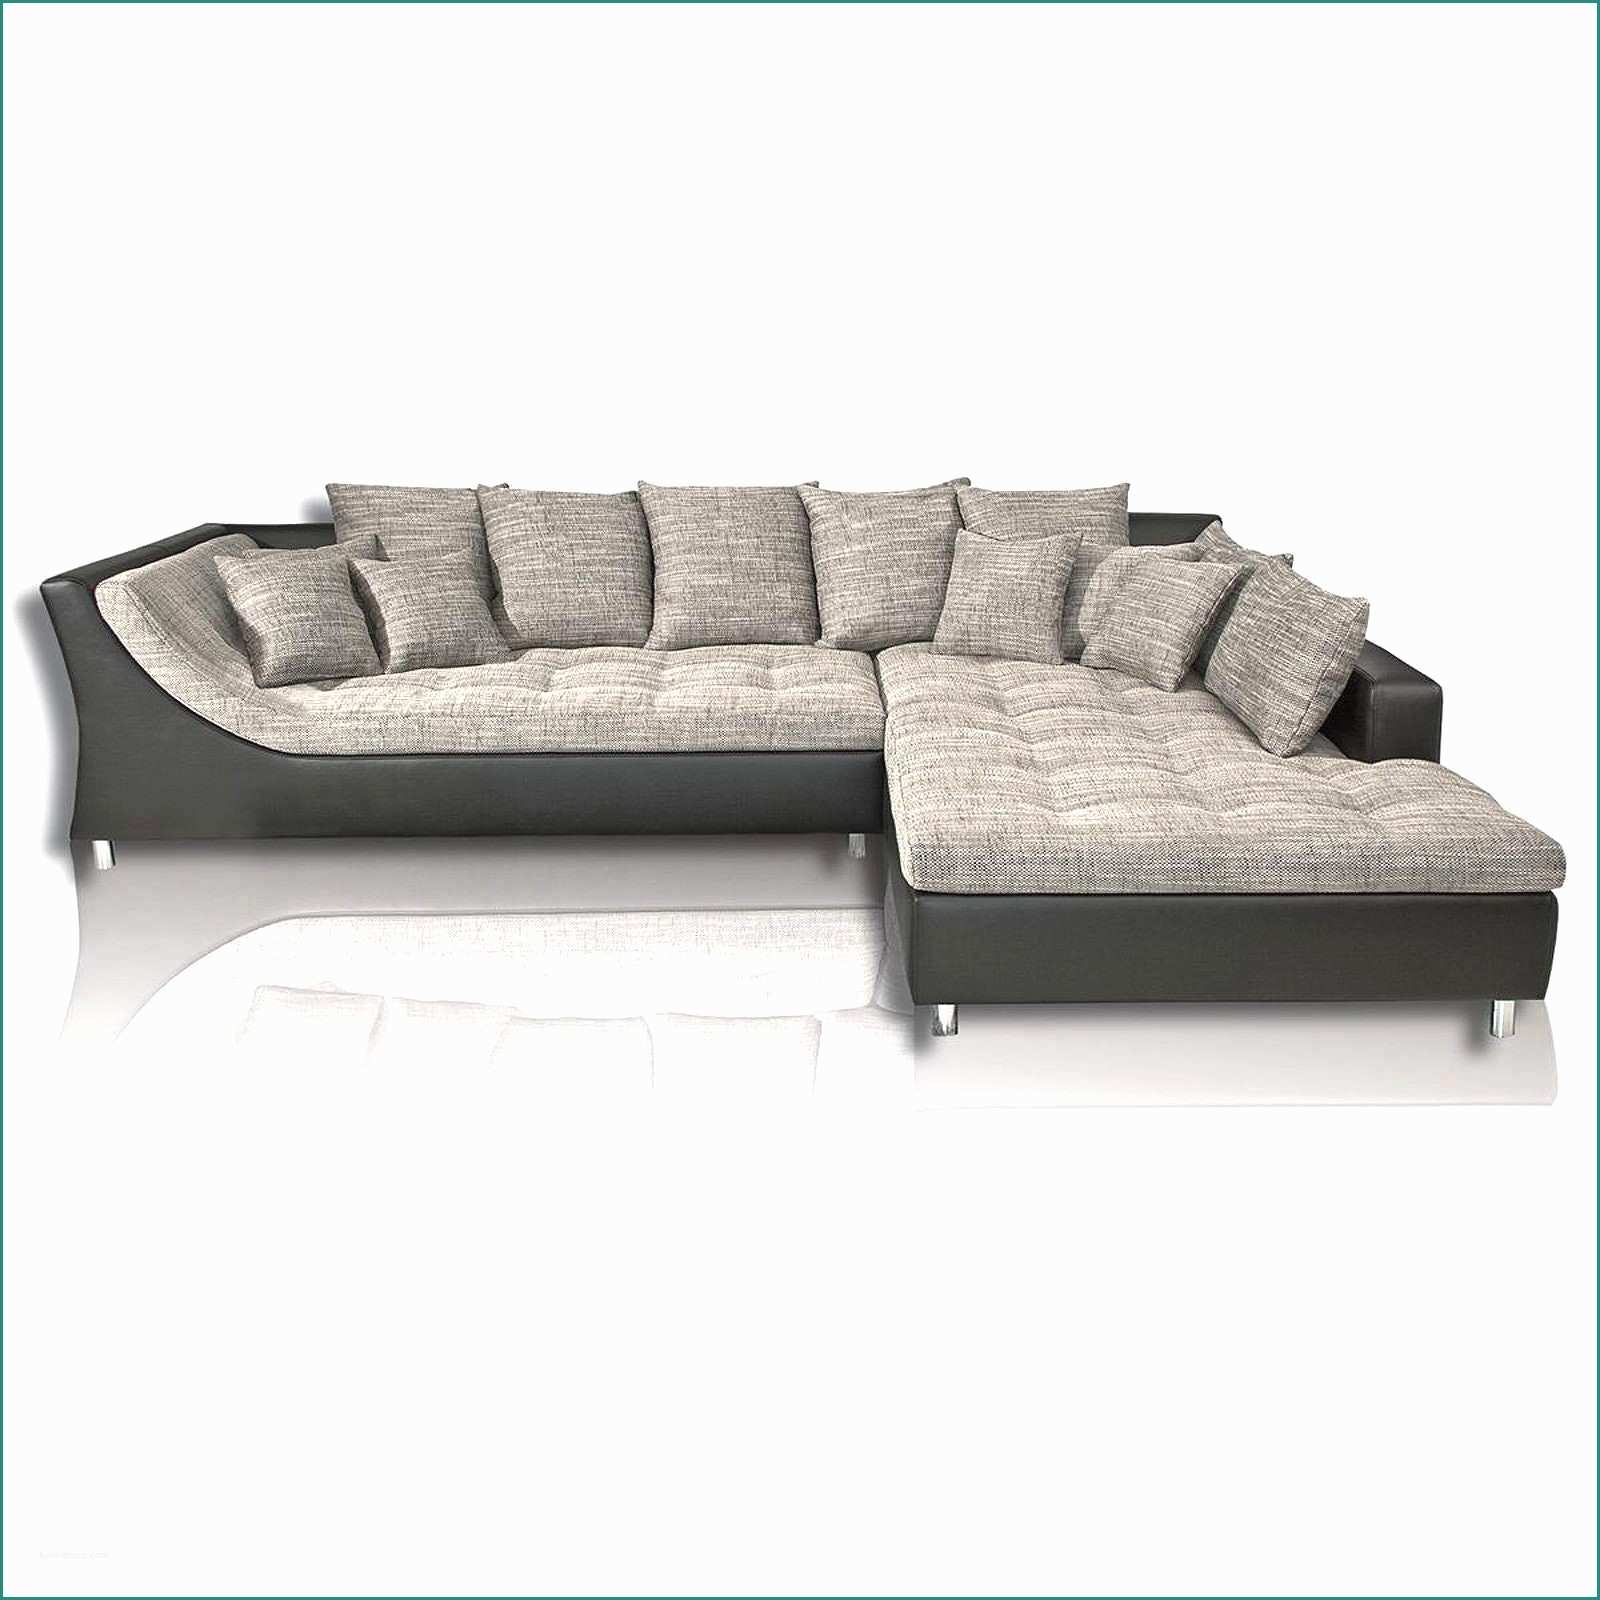 Chaise Longue Divano E sofa Chaise Longue Erta Impresionante sofas Im Angebot Full Size